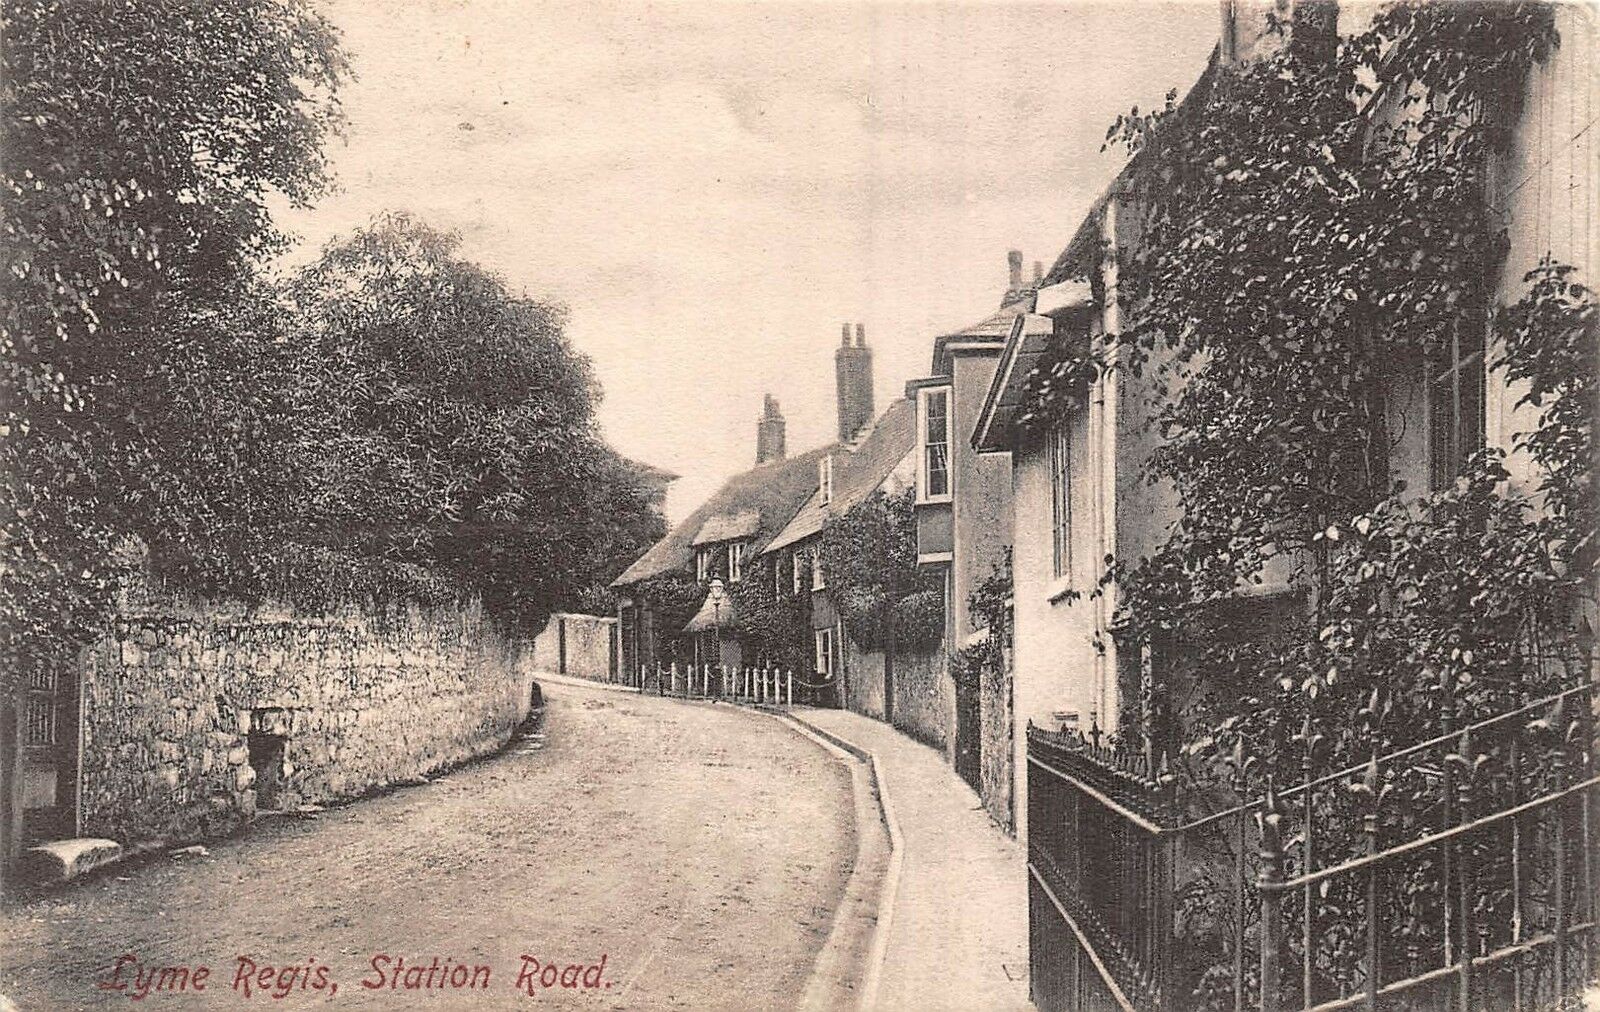 Vintage postcard of Station Road, Lyme Regis circa 1905